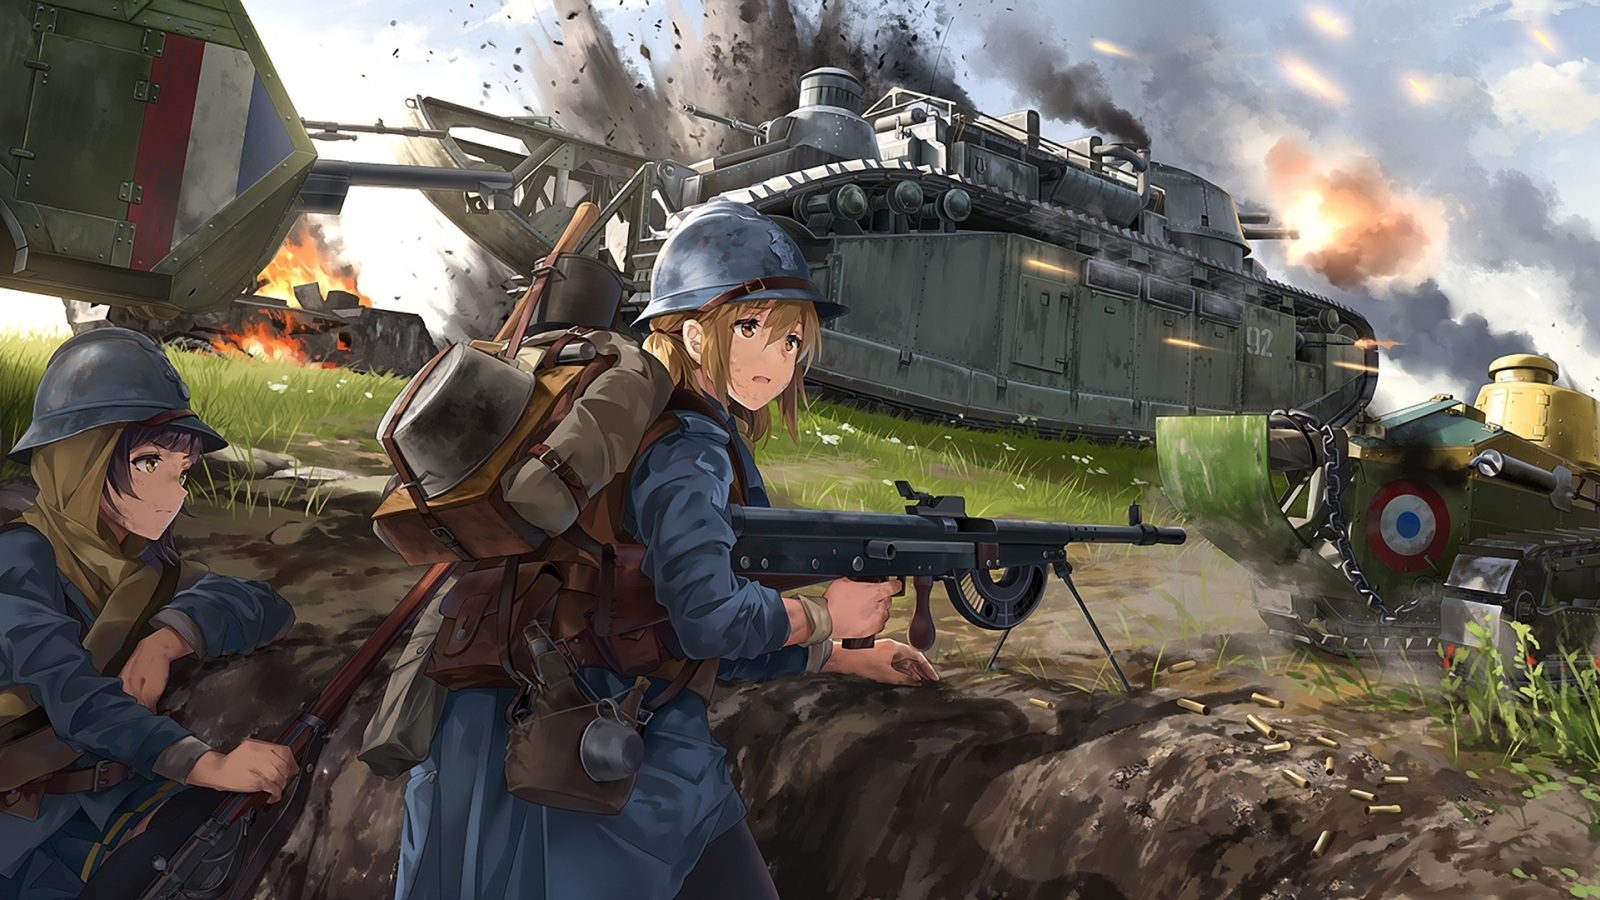 Download wallpaper x cute soldiers anime girls artwork original widescreen x hd background